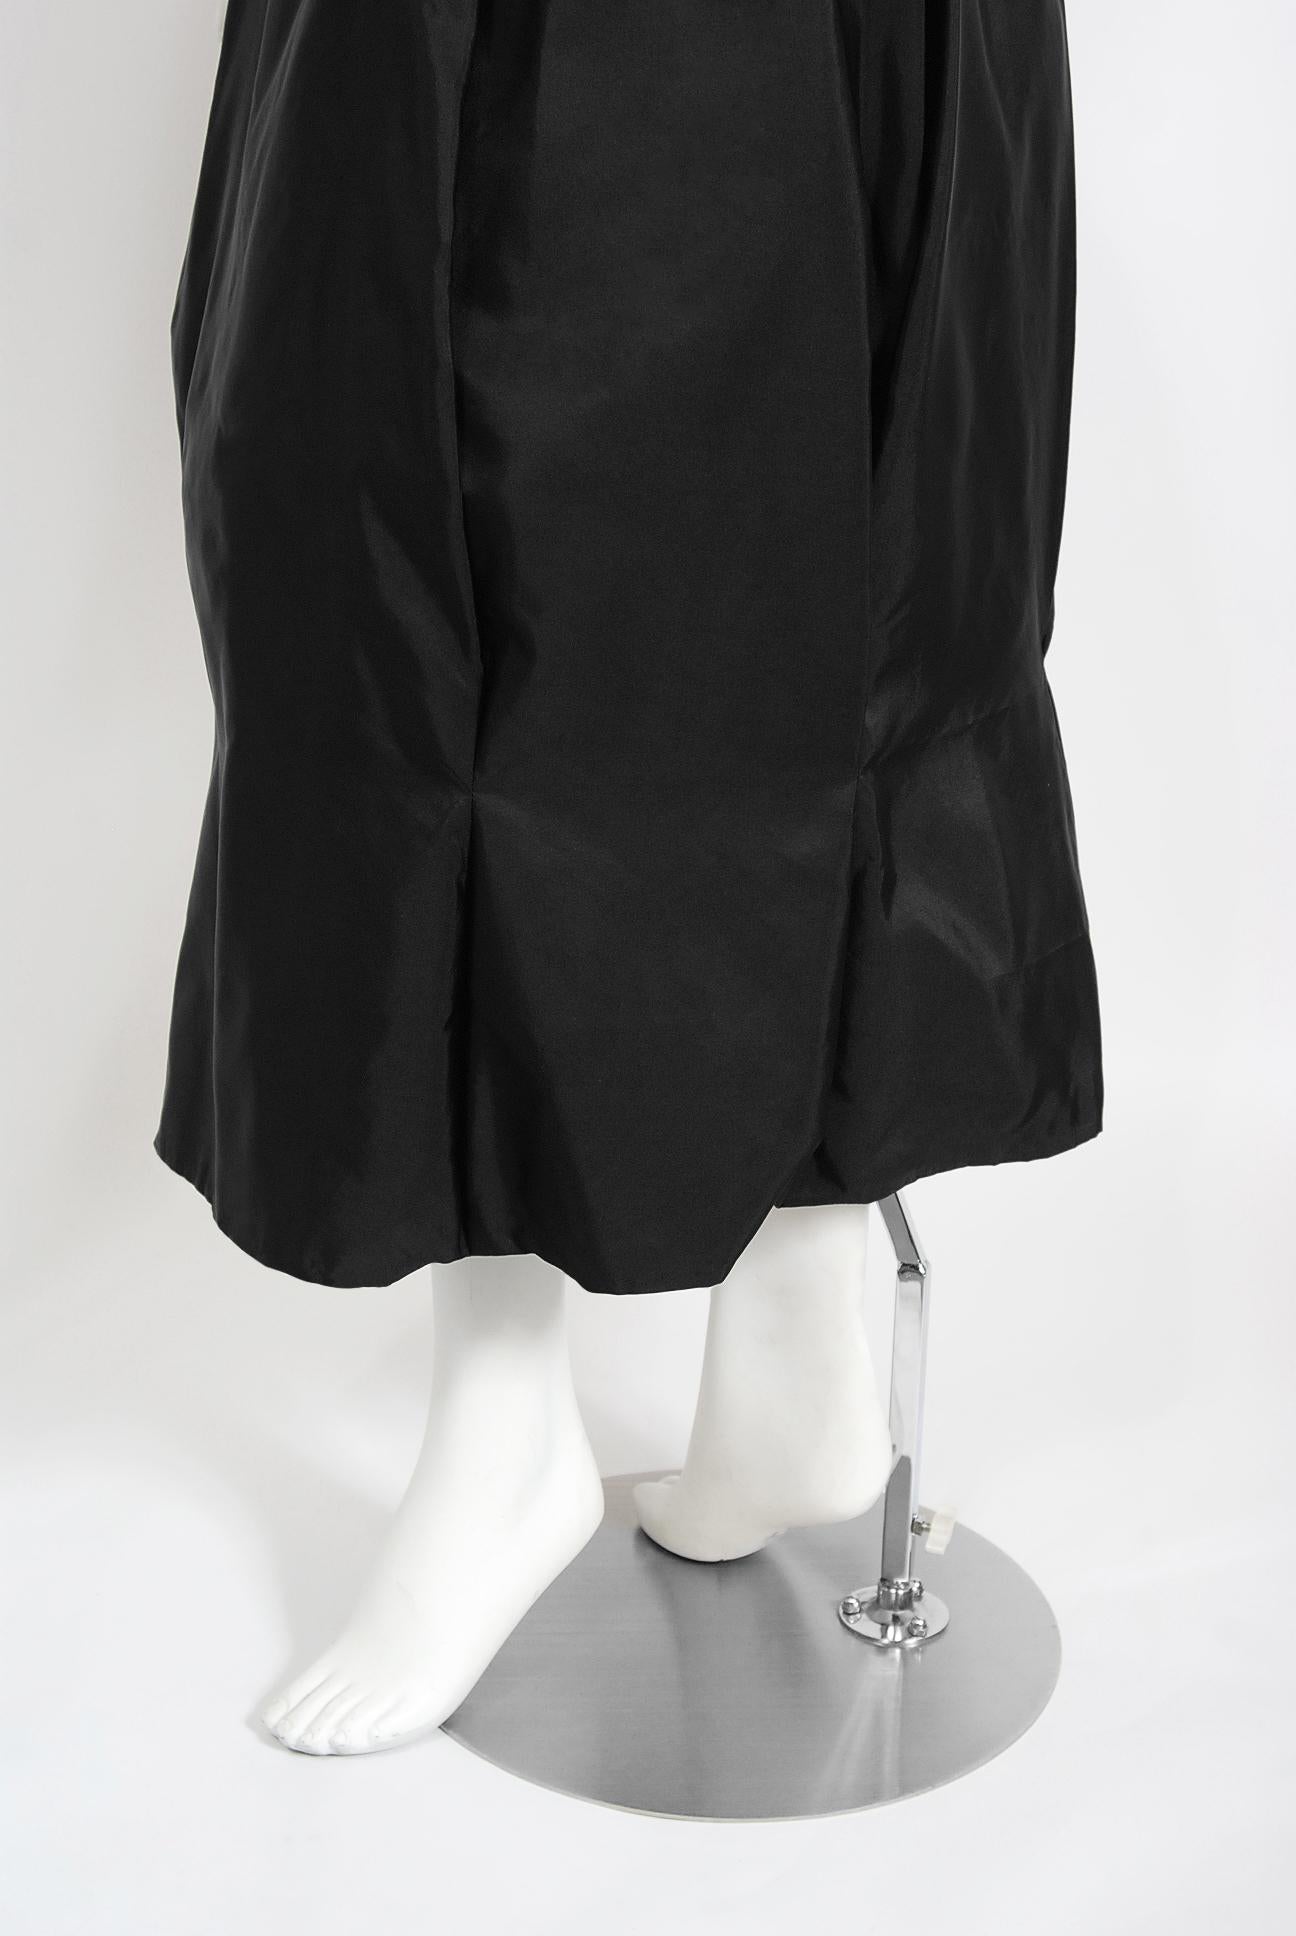 Black Vintage 1950's Madame Grès Haute Couture Sculpted Silk Back-Bow Dress & Jacket  For Sale